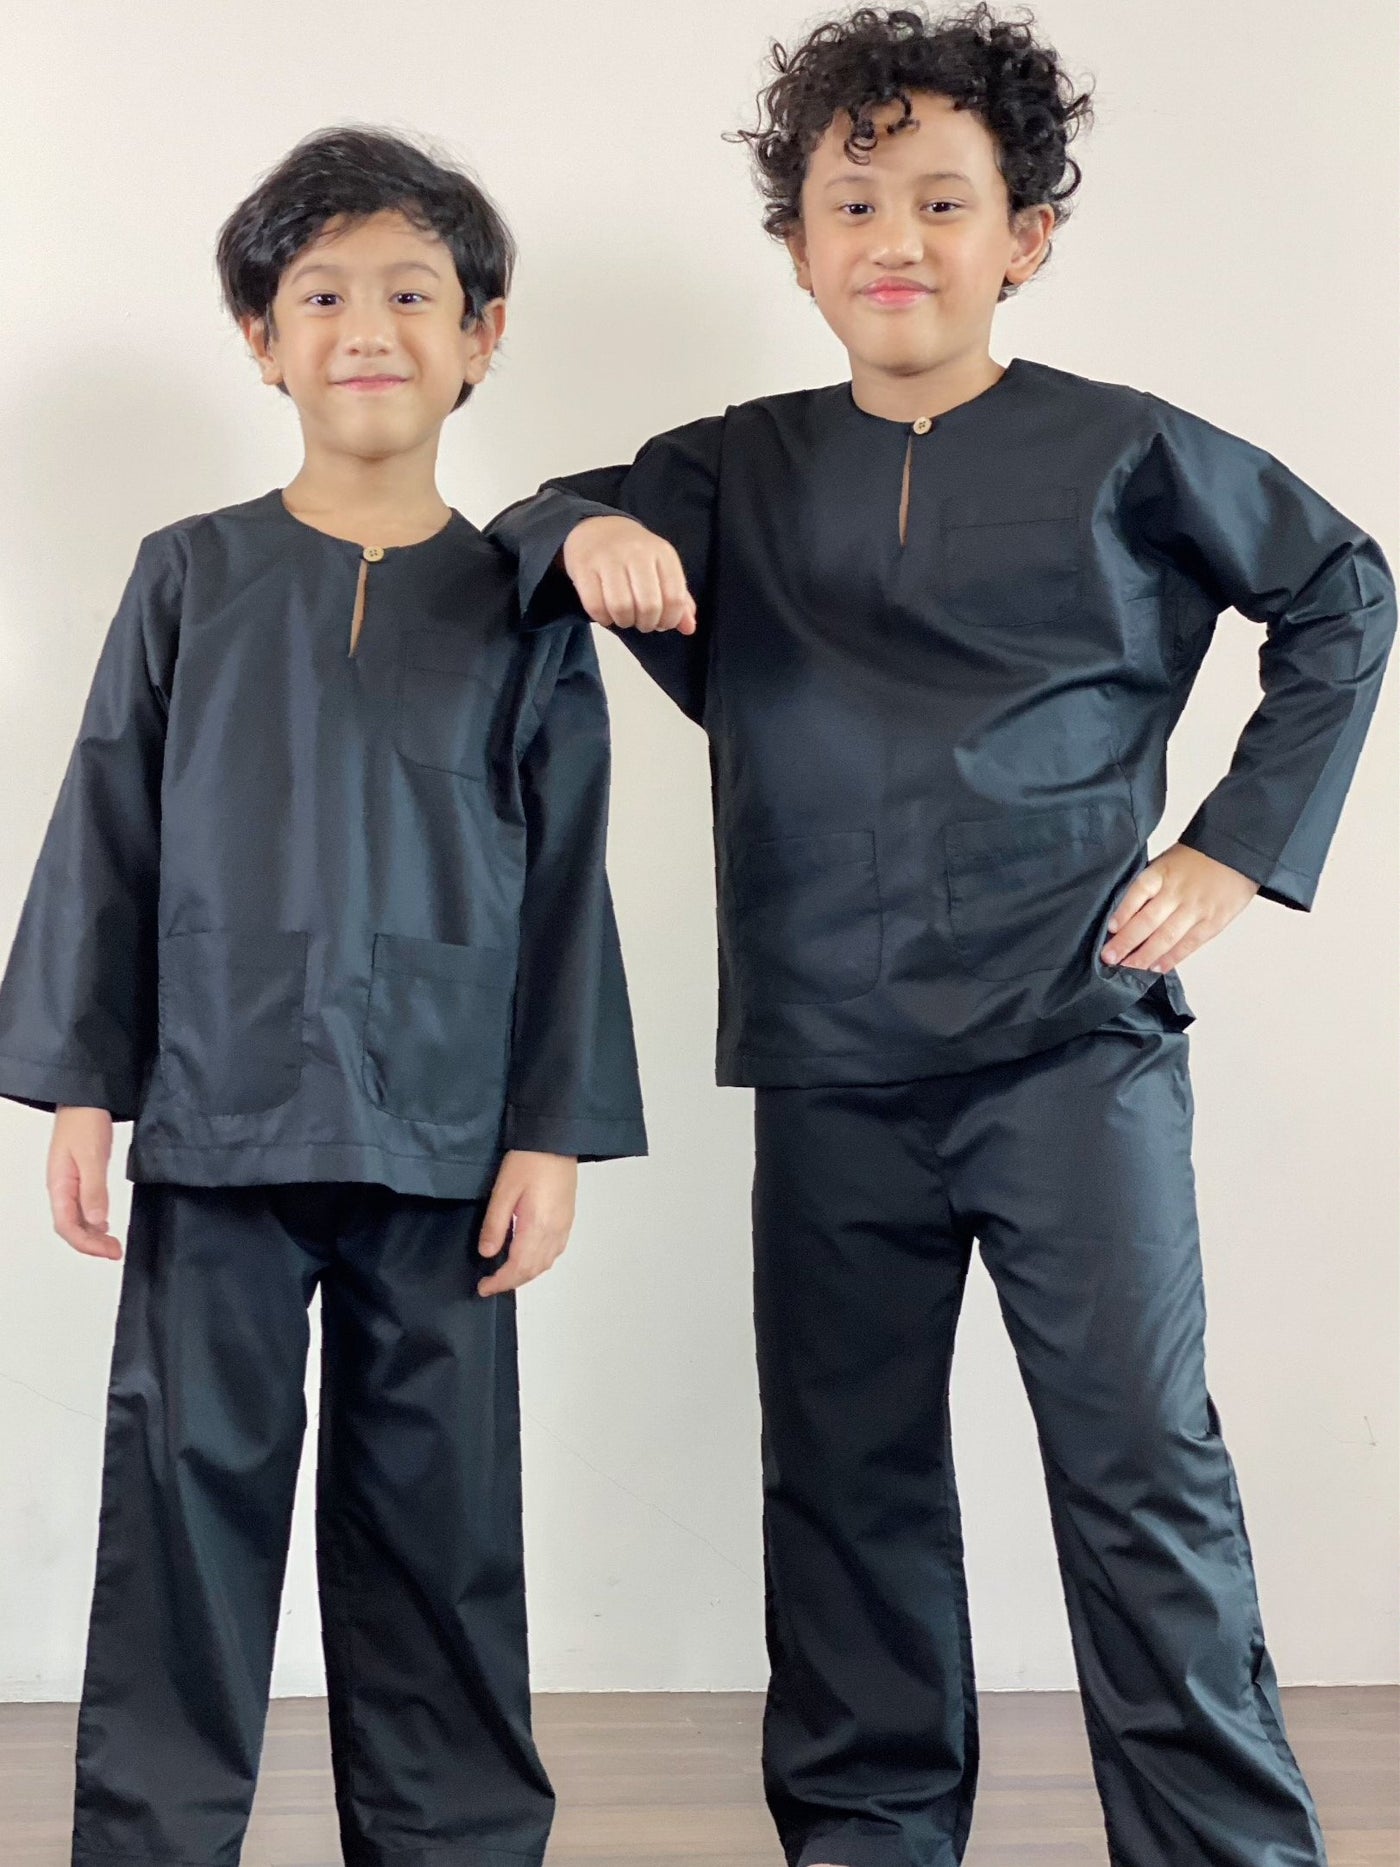 TUAH Baju Melayu Pesak Set in Black